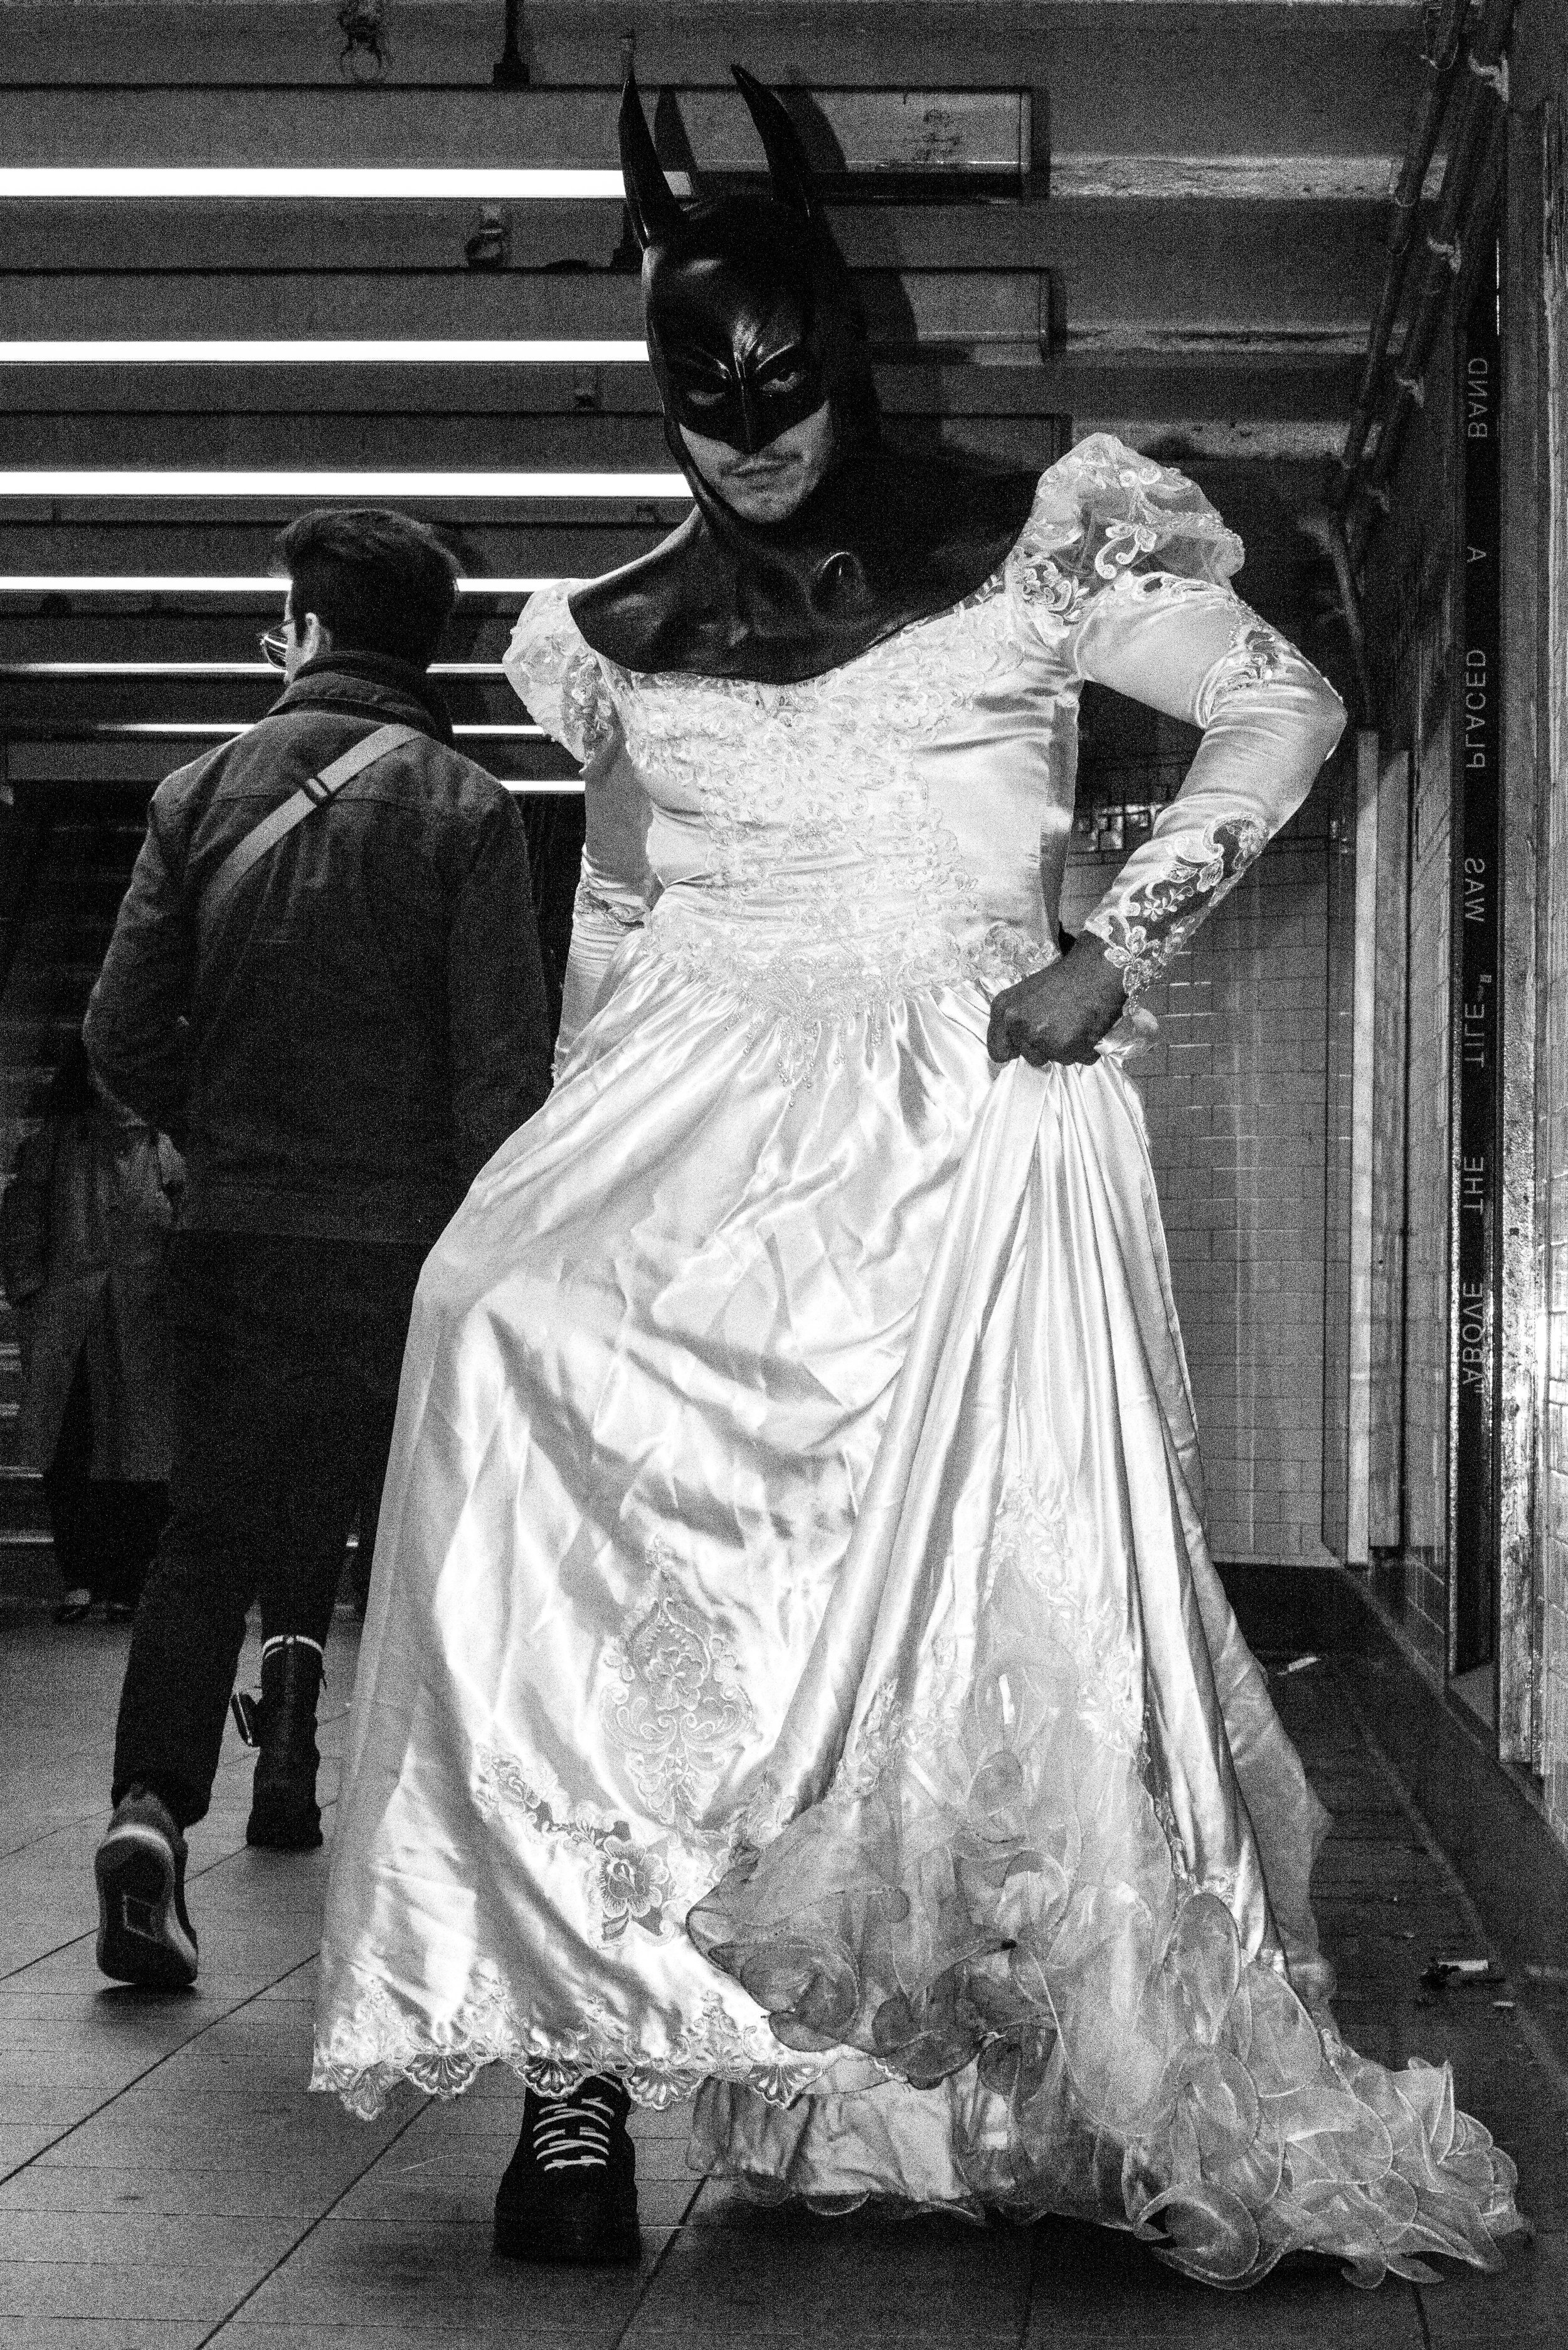 Batman in Dress Subway Pose B&W Halloween NYC 2.jpg